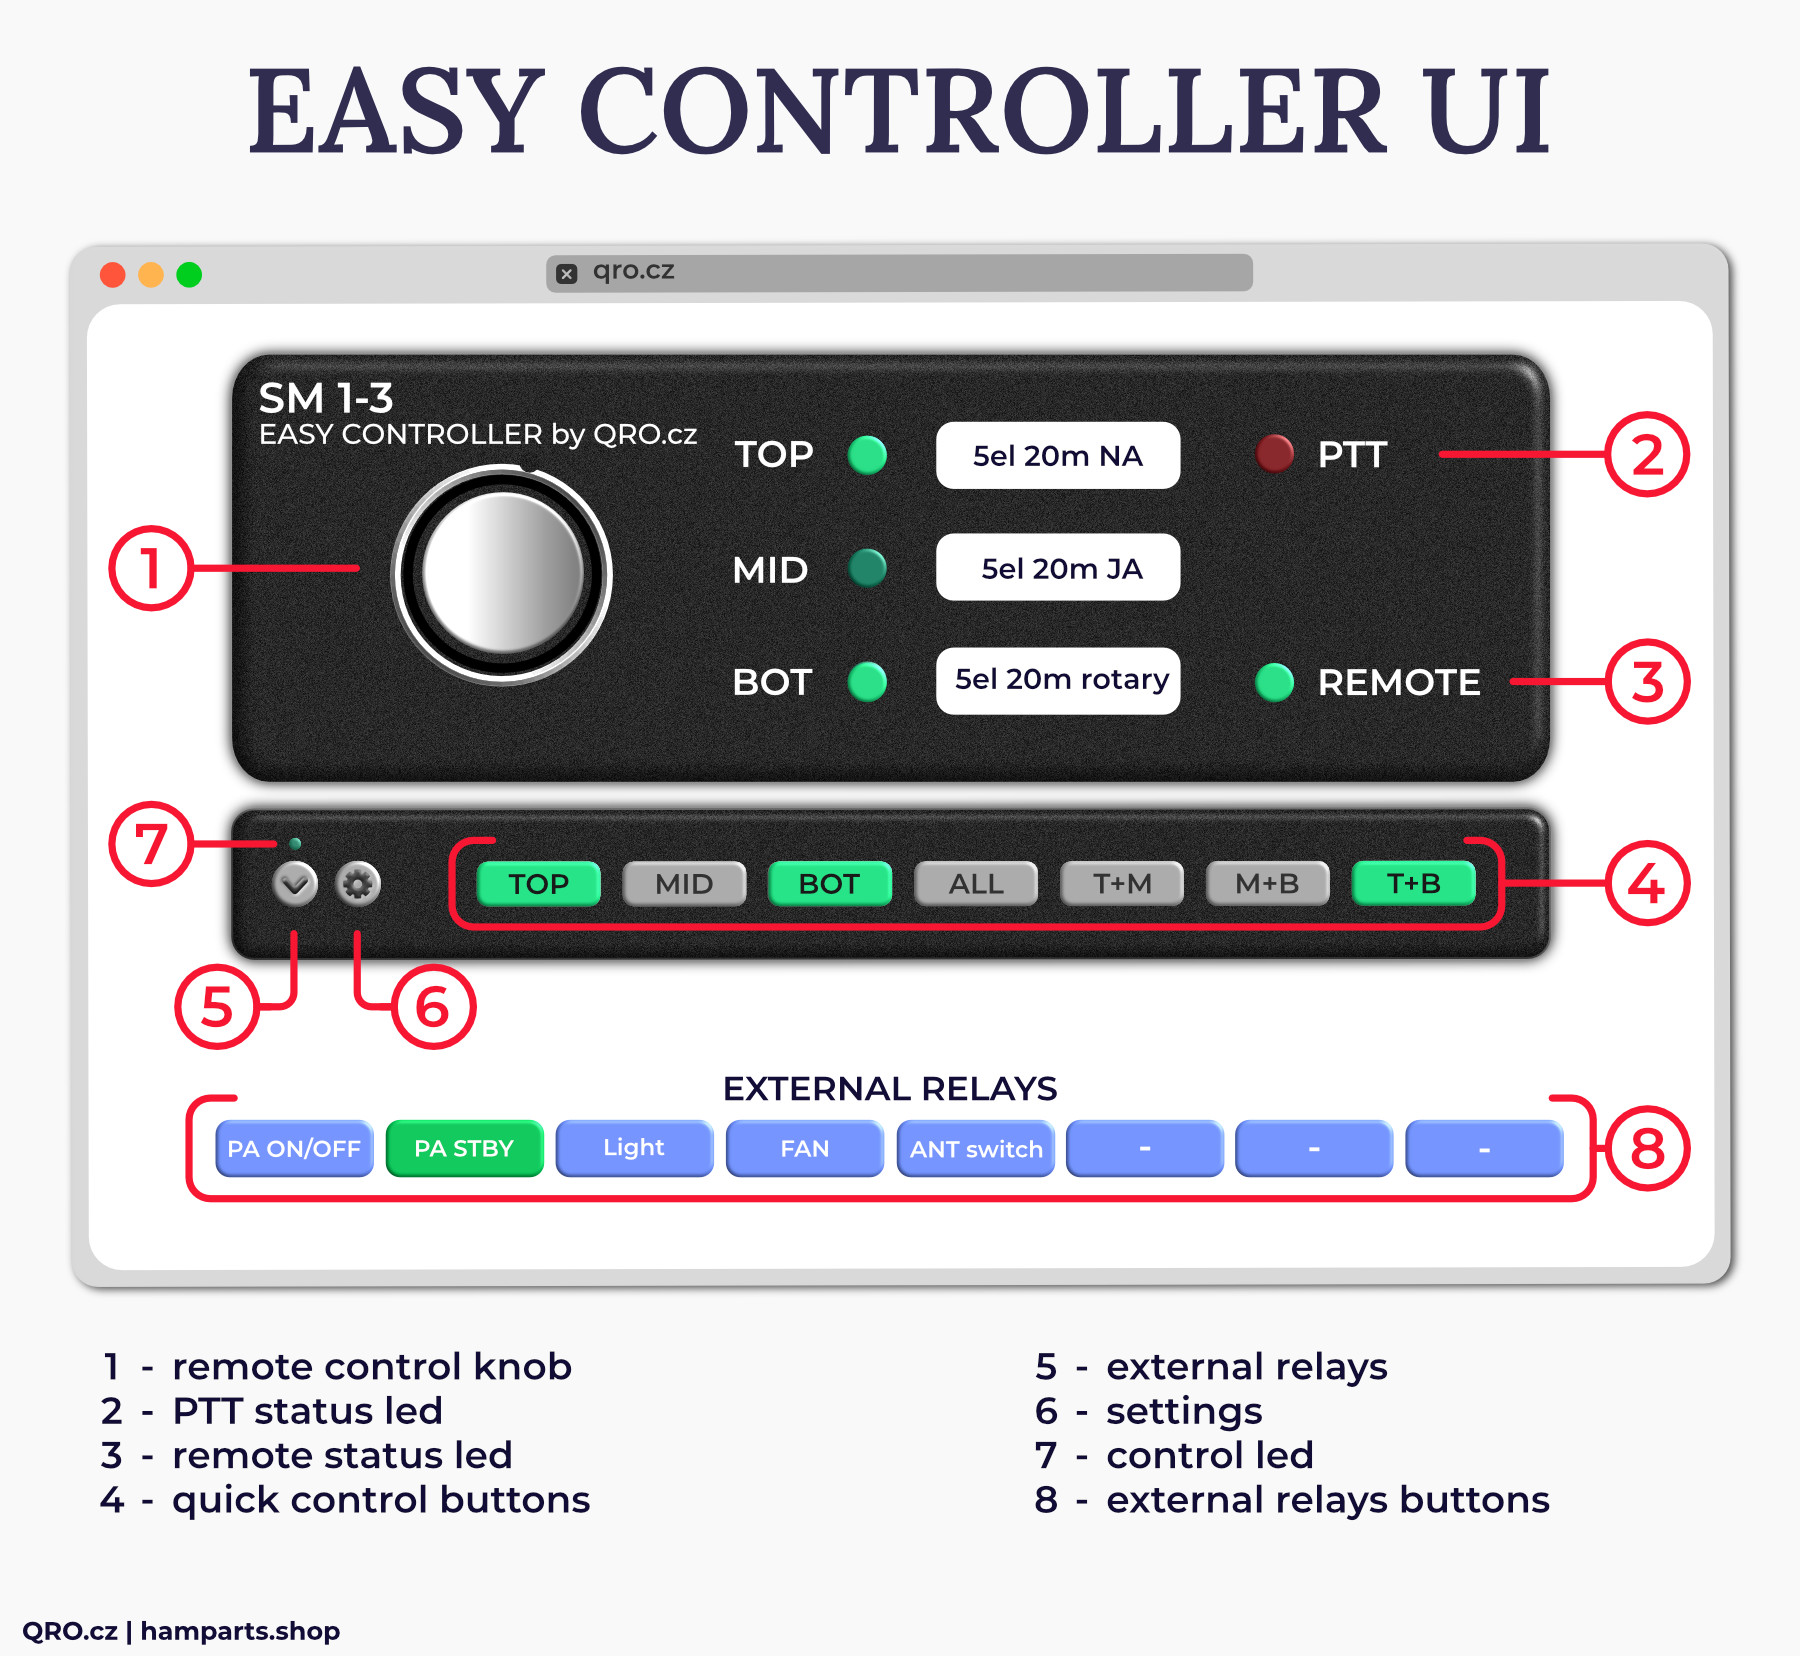 easy controller user interface qro.cz hamparts.shop